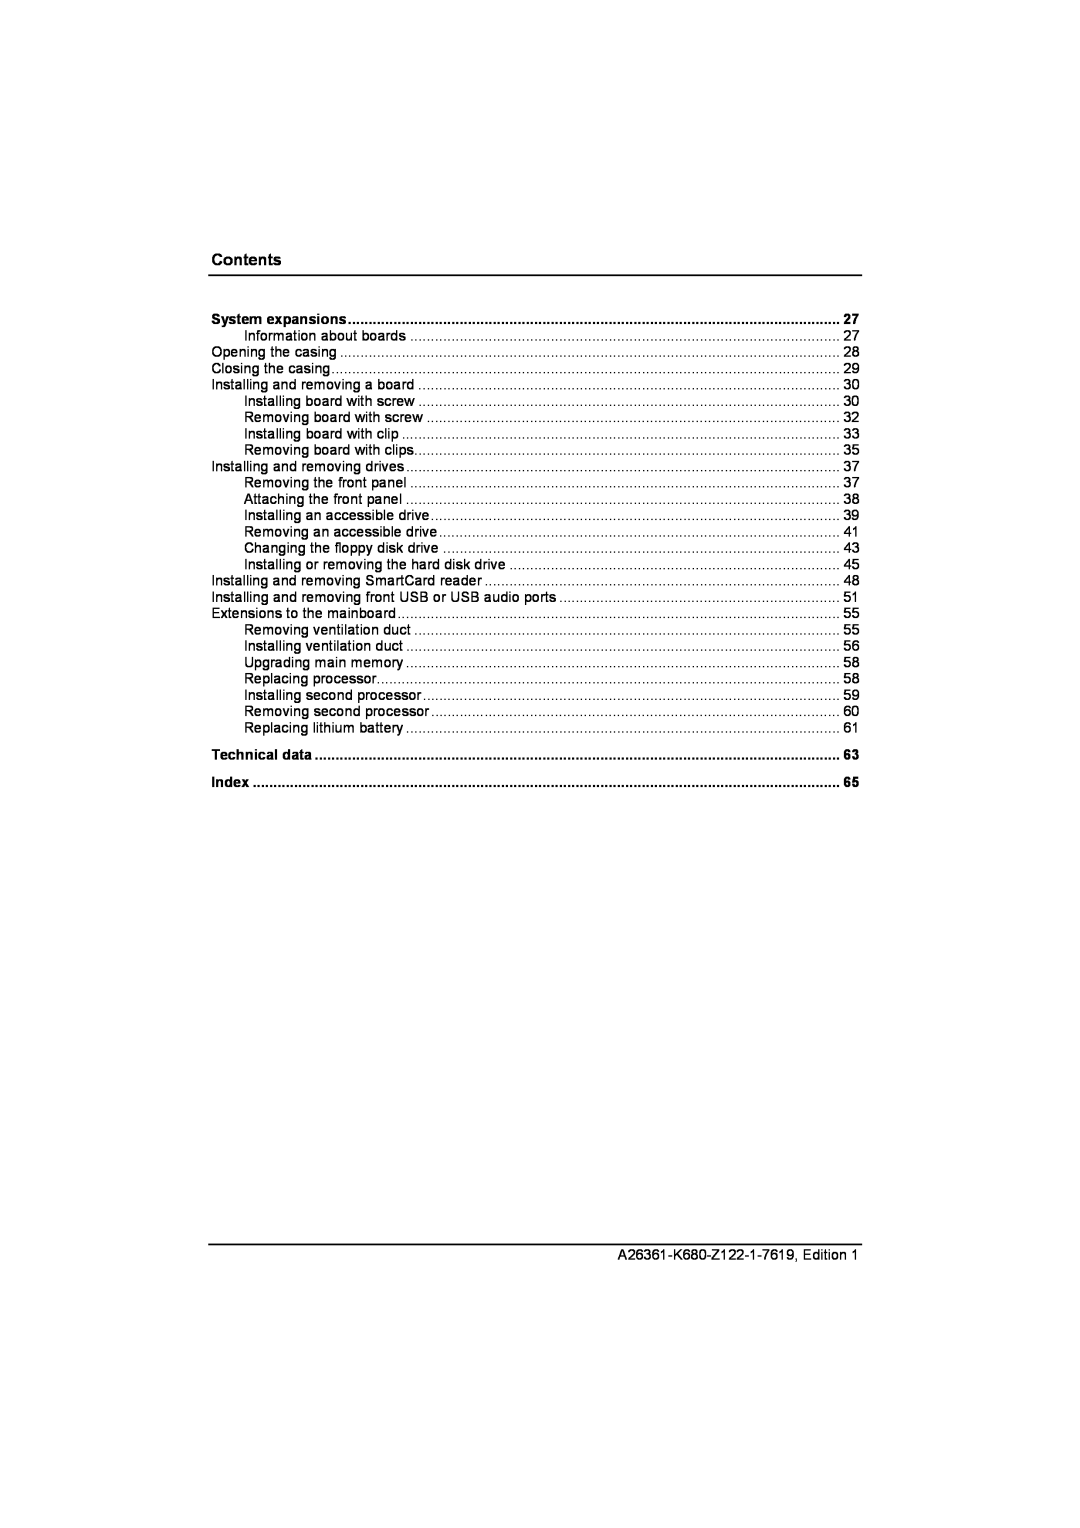 Fujitsu V810, R630 manual Contents, Technical data, Index 